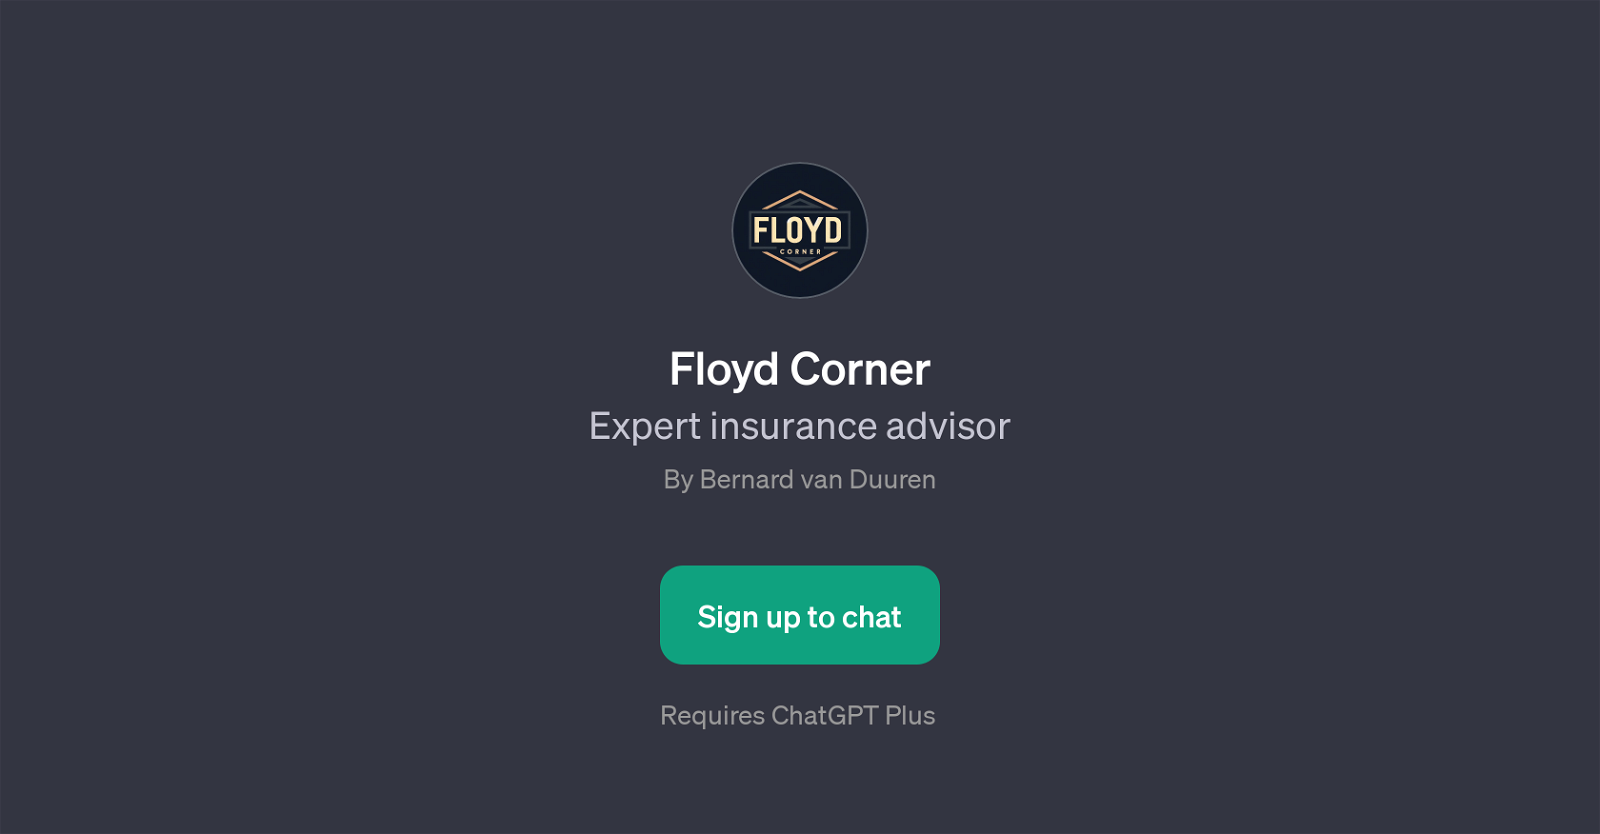 Floyd Corner website